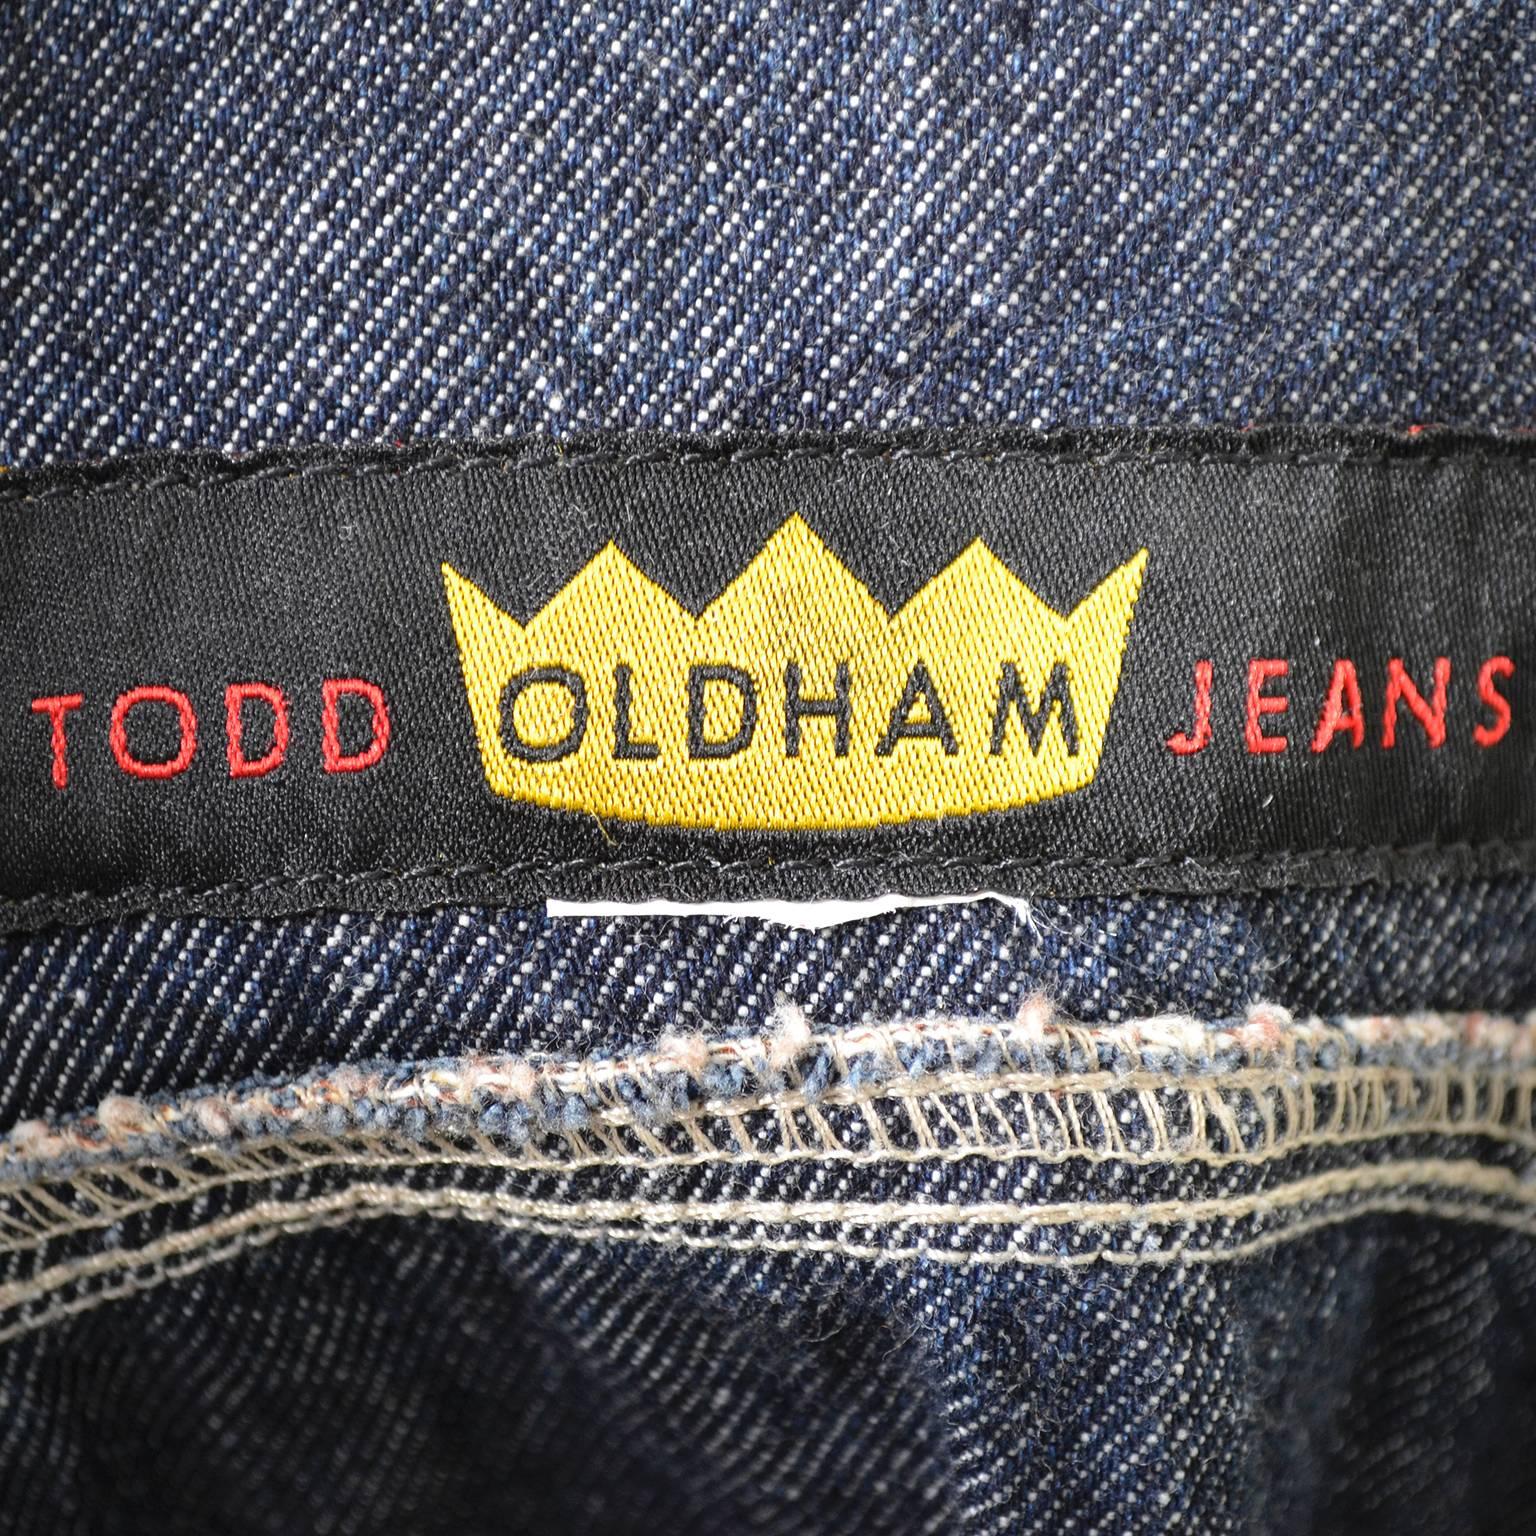 Women's 1990s Todd Oldham Vintage Denim Style Jacket Snakeskin Print Size Medium